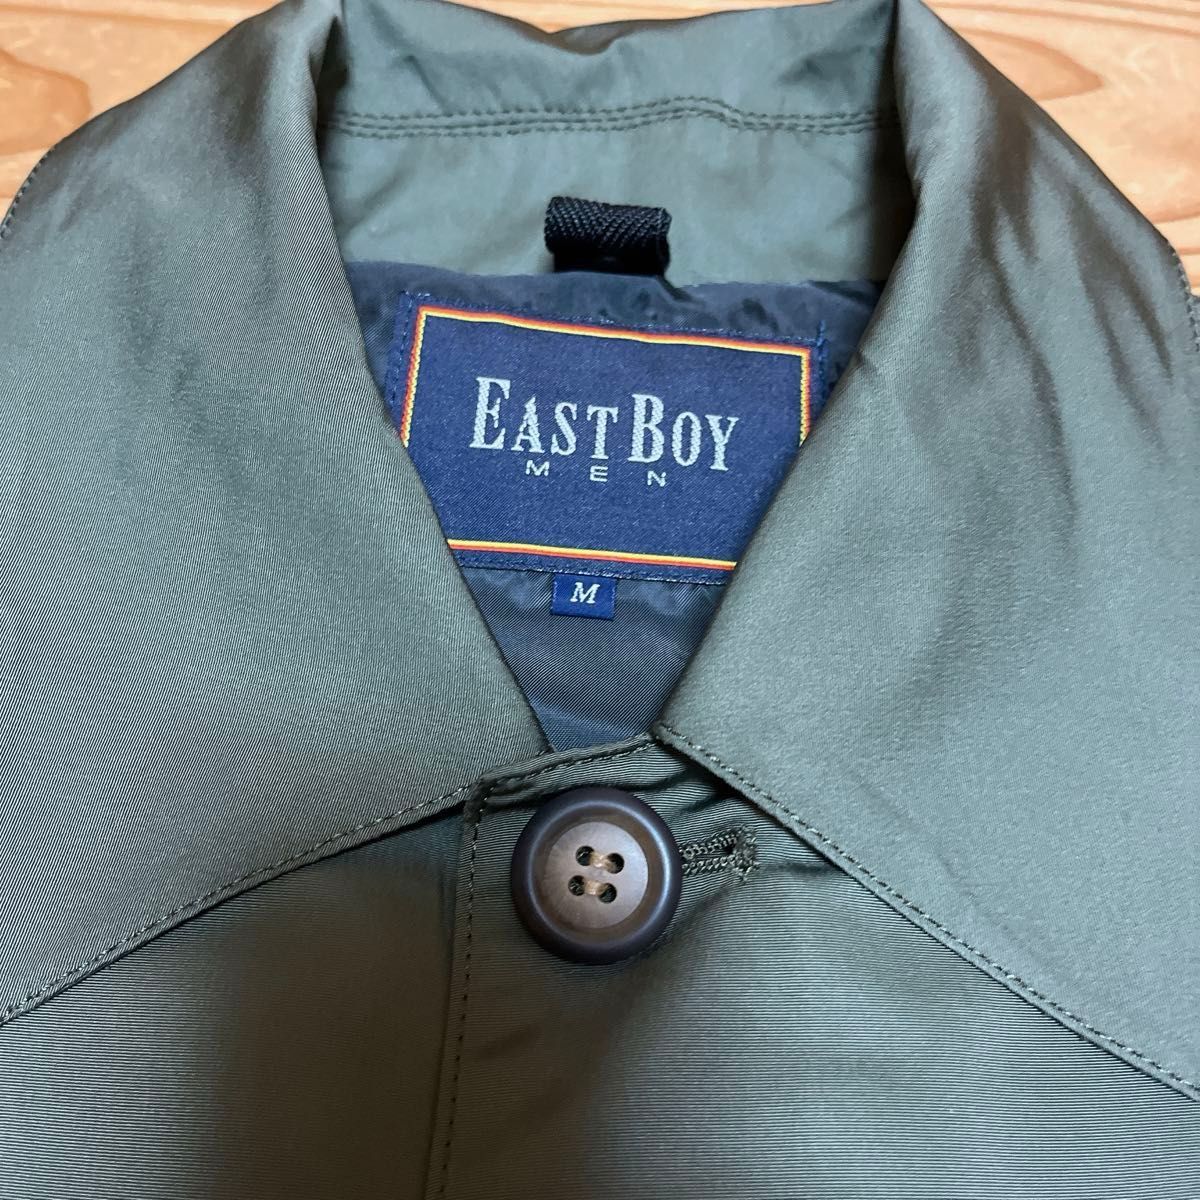 EAST BOYイーストボーイ  メンズ ステンカラーコート アウター フード付  コート ジャケット 中厚 薄手 春